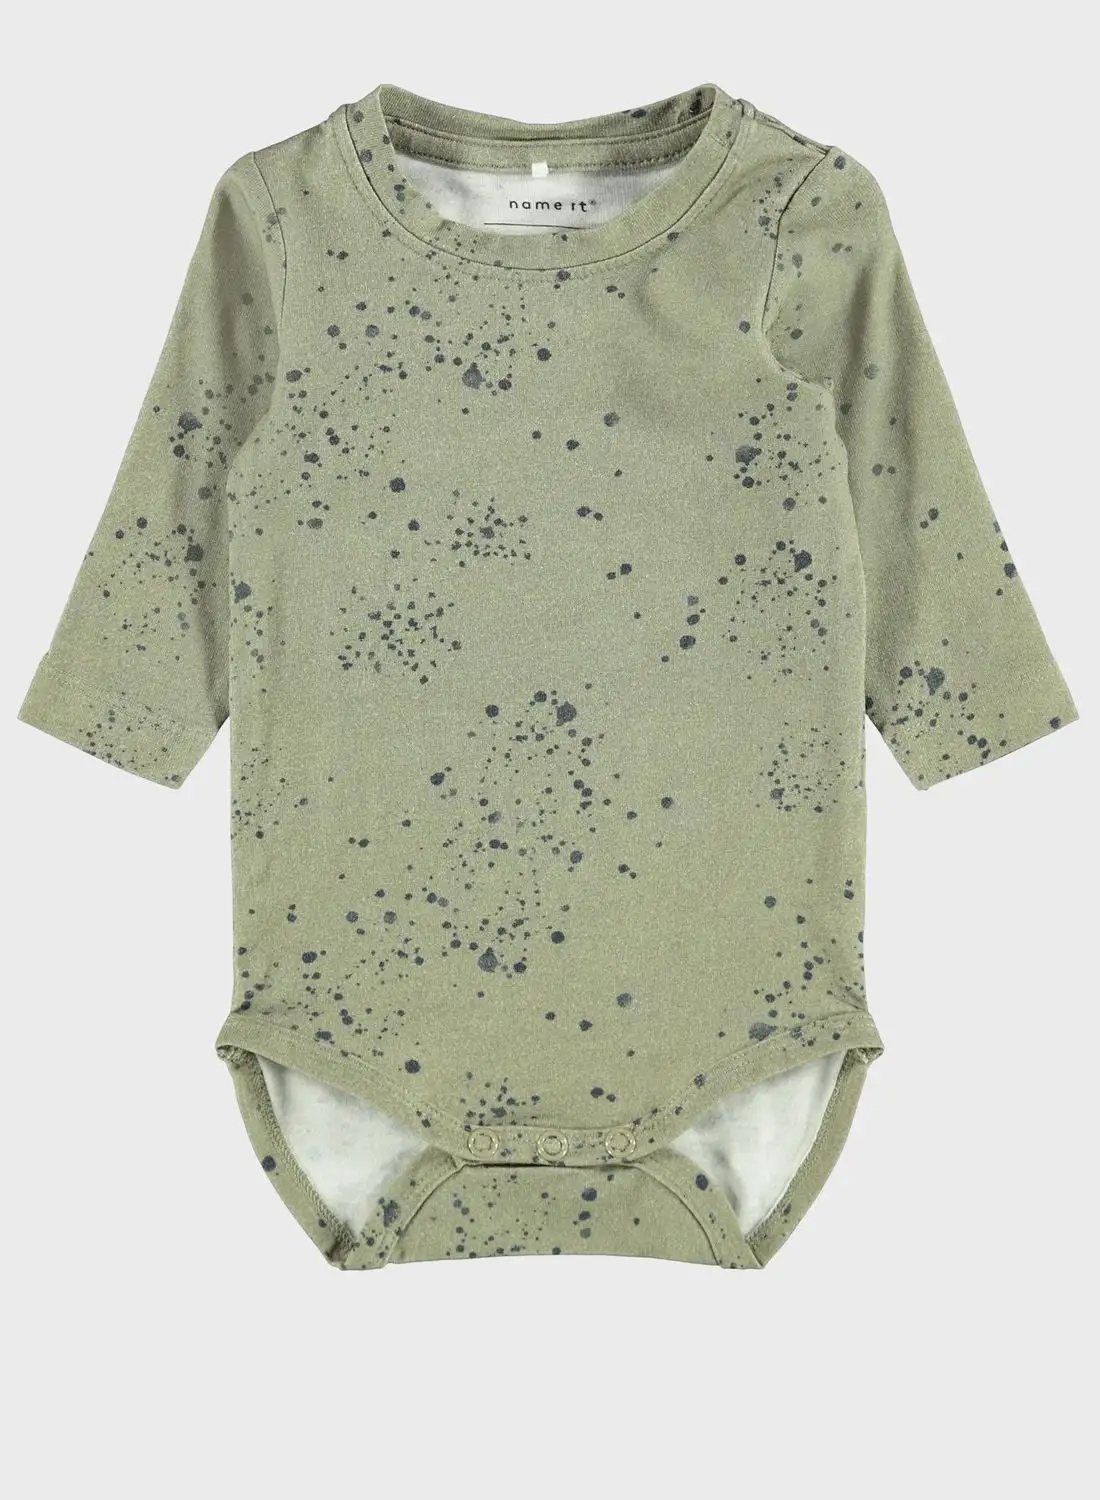 NAME IT Infant Printed Bodysuit